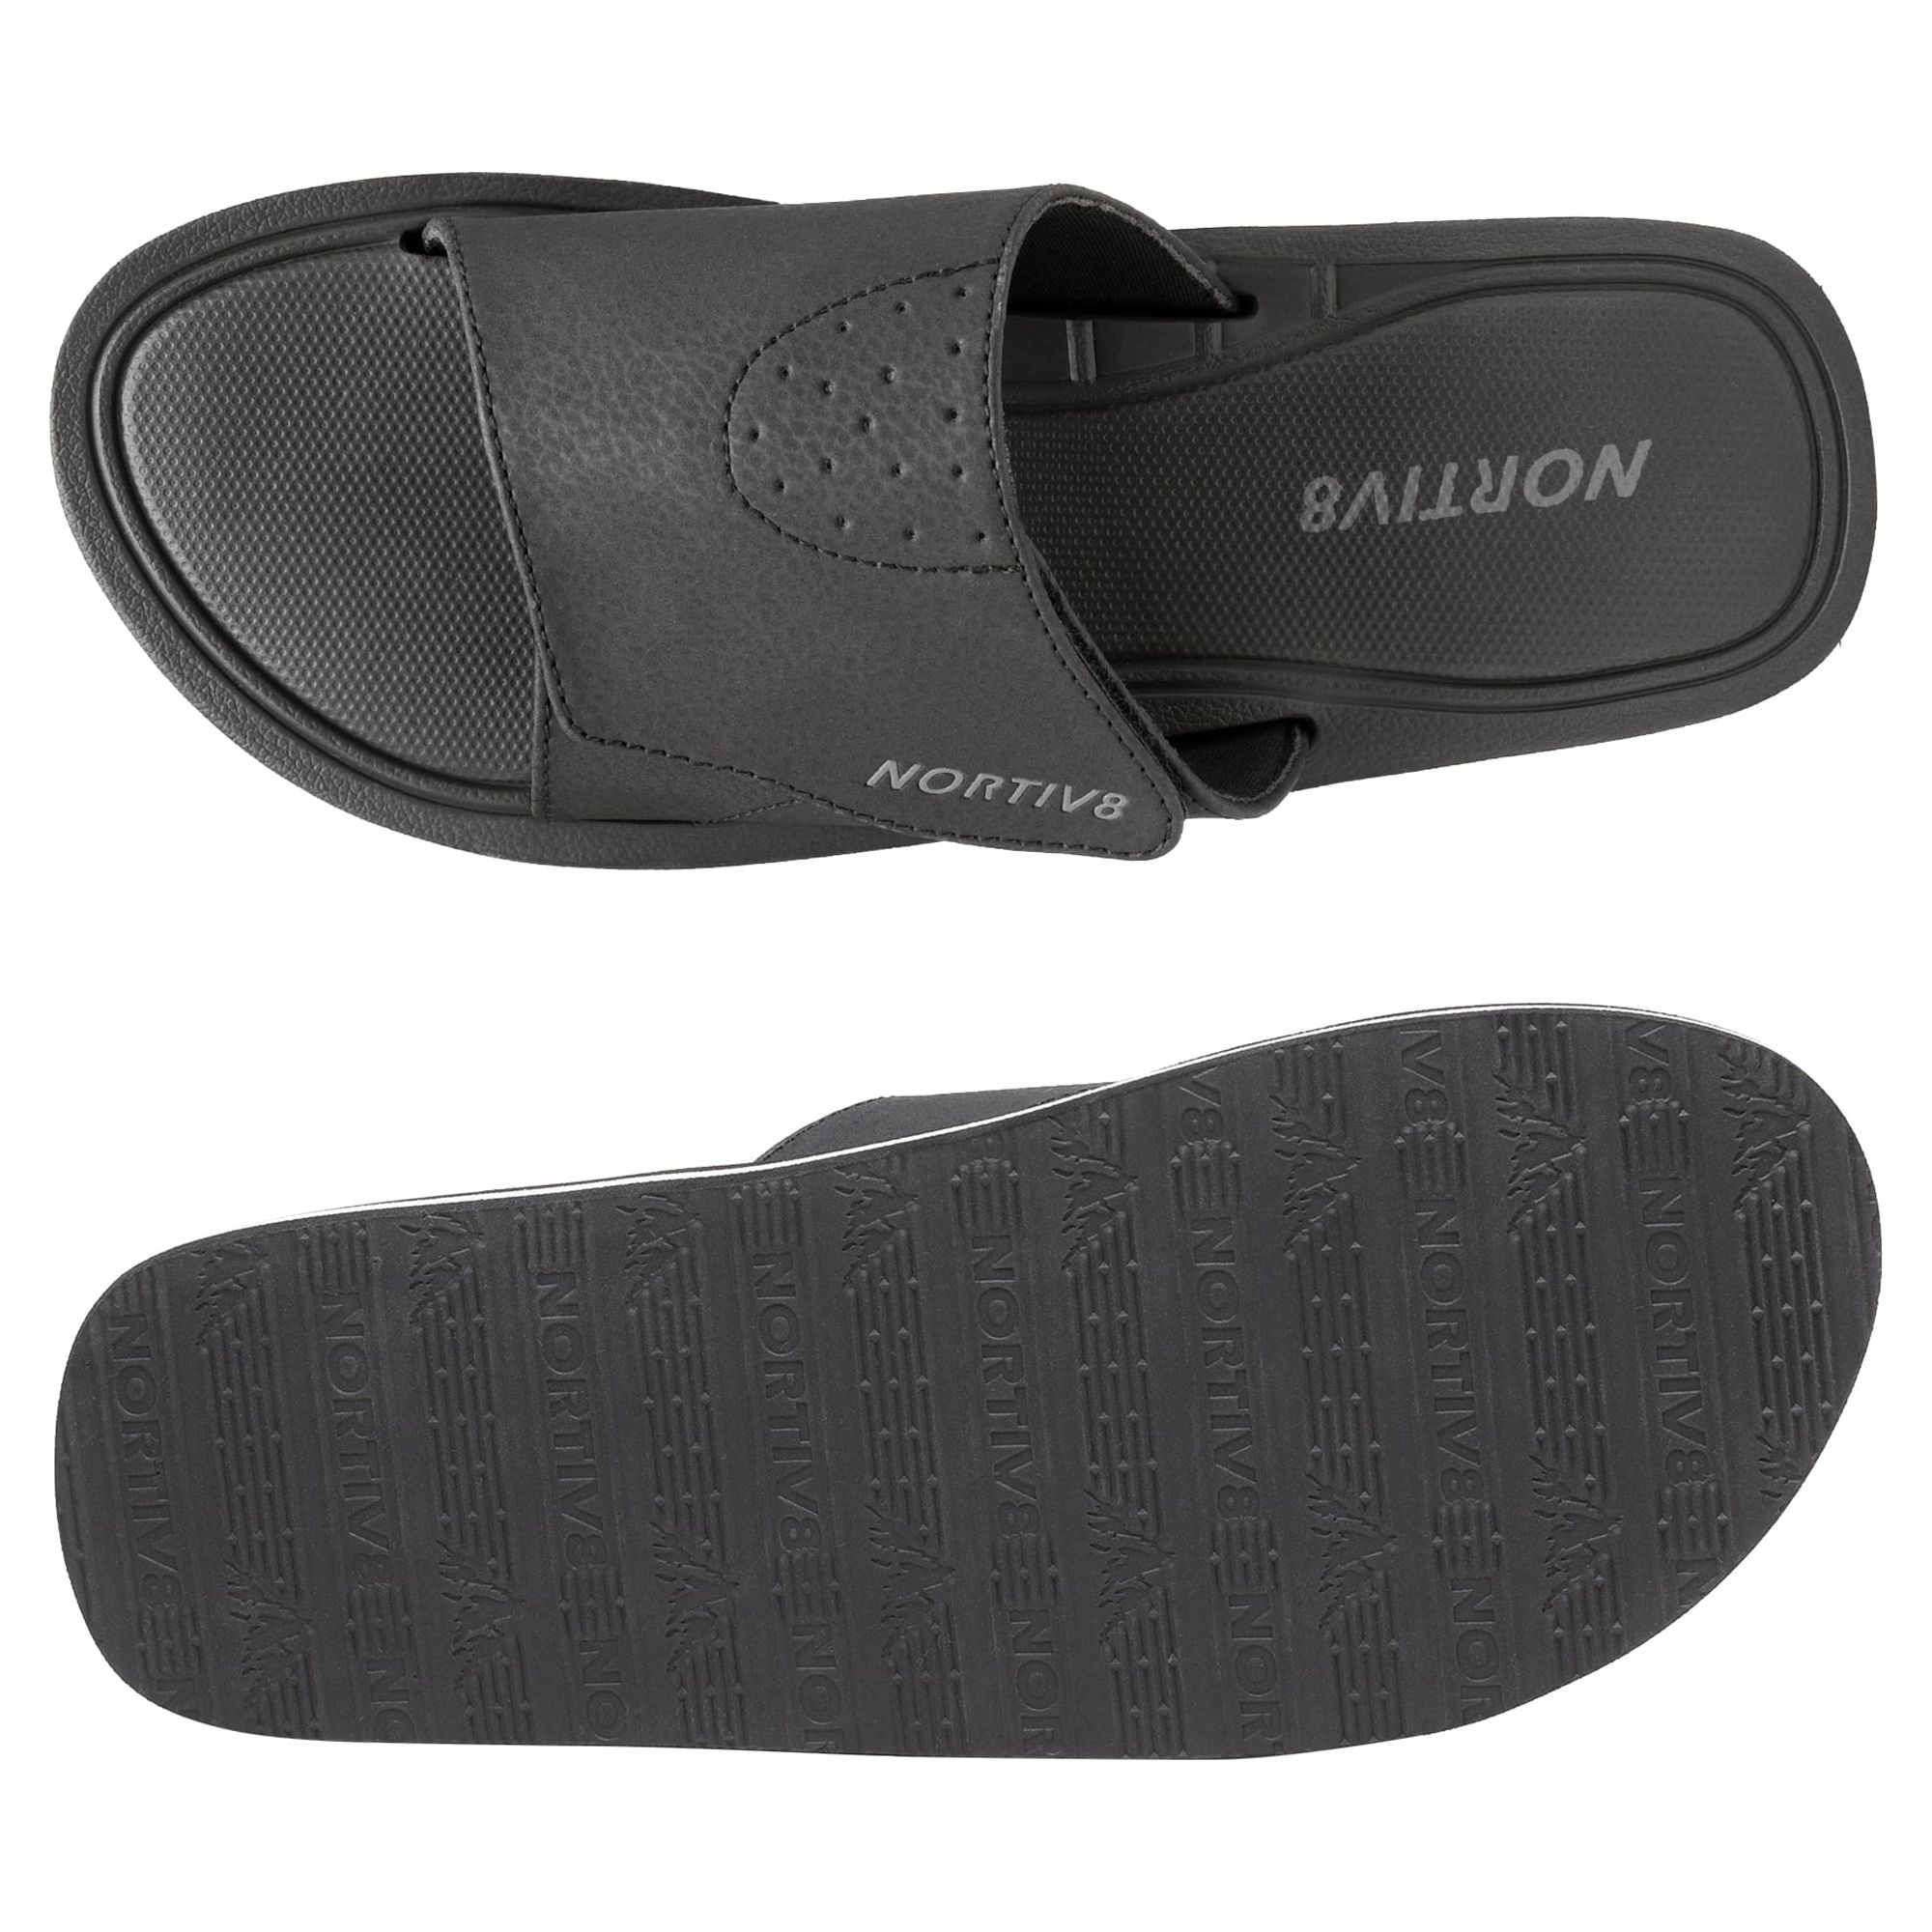 Nortiv8 Men's Memory Foam Adjustable Slide Sandals Comfort Lightweight Summer Beach Sandals Shoes FUSION BLACK Size 10 - image 3 of 5